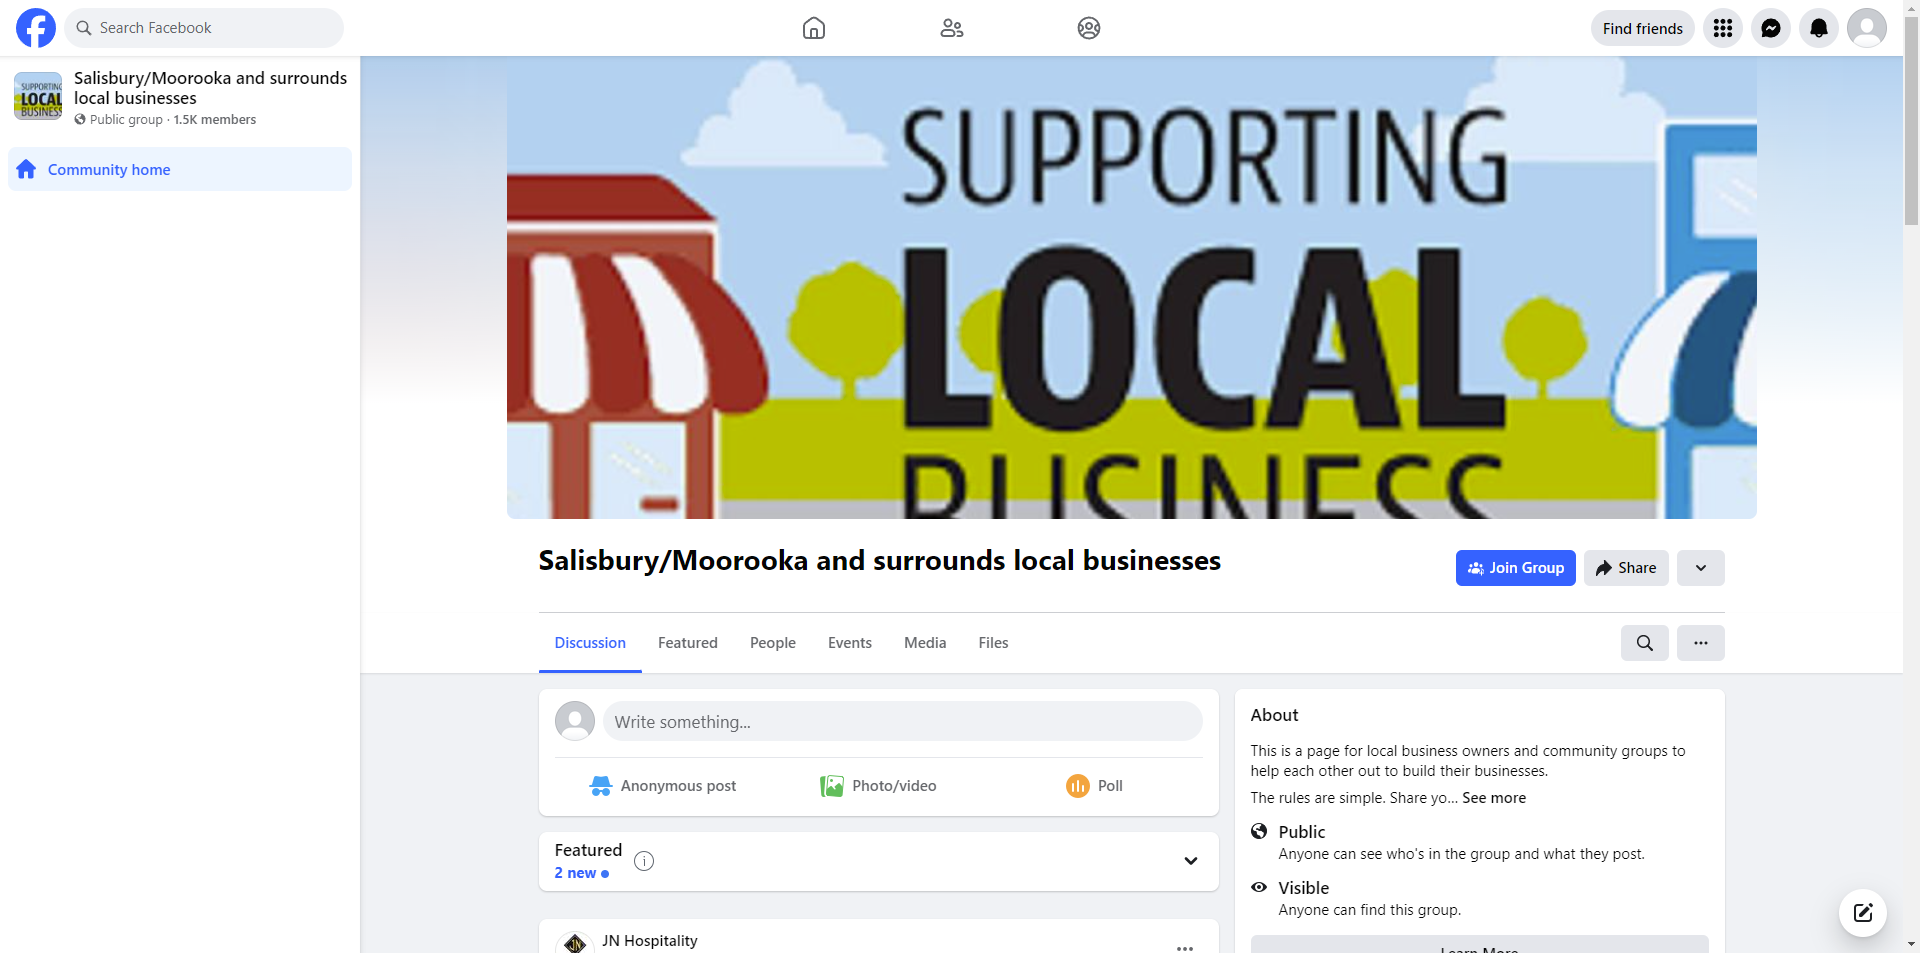 Salisbury/Moorooka and Surrounds Local Businesses